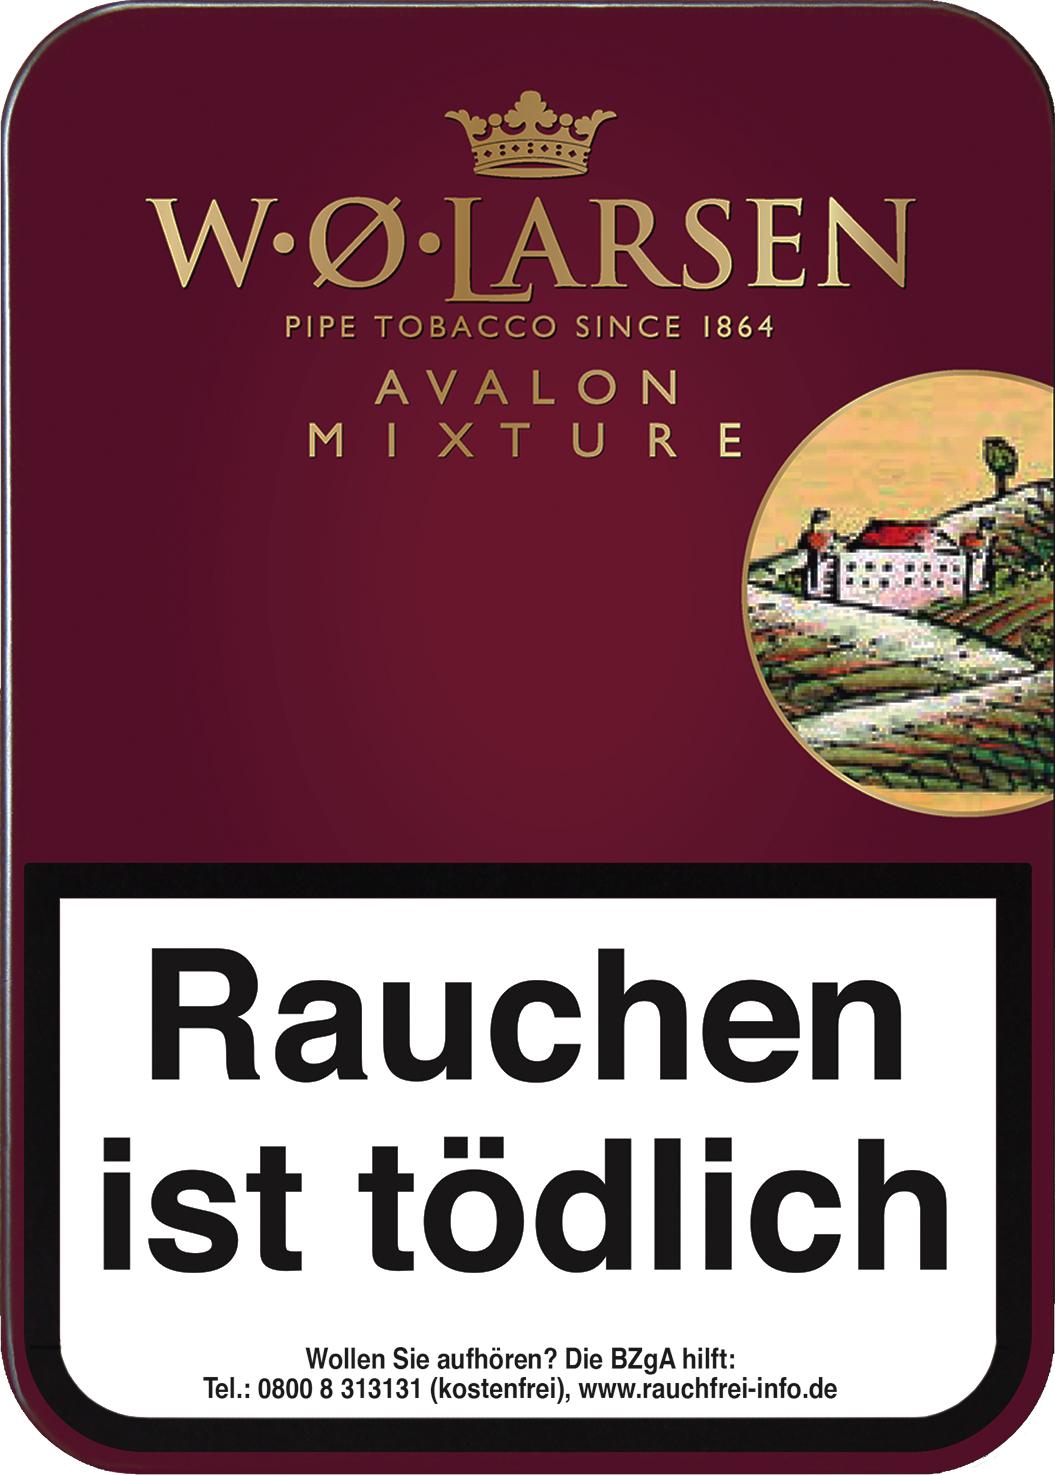 W.O. Larsen Avalon Mixture Pfeifentabak 1 x 100g Krüll